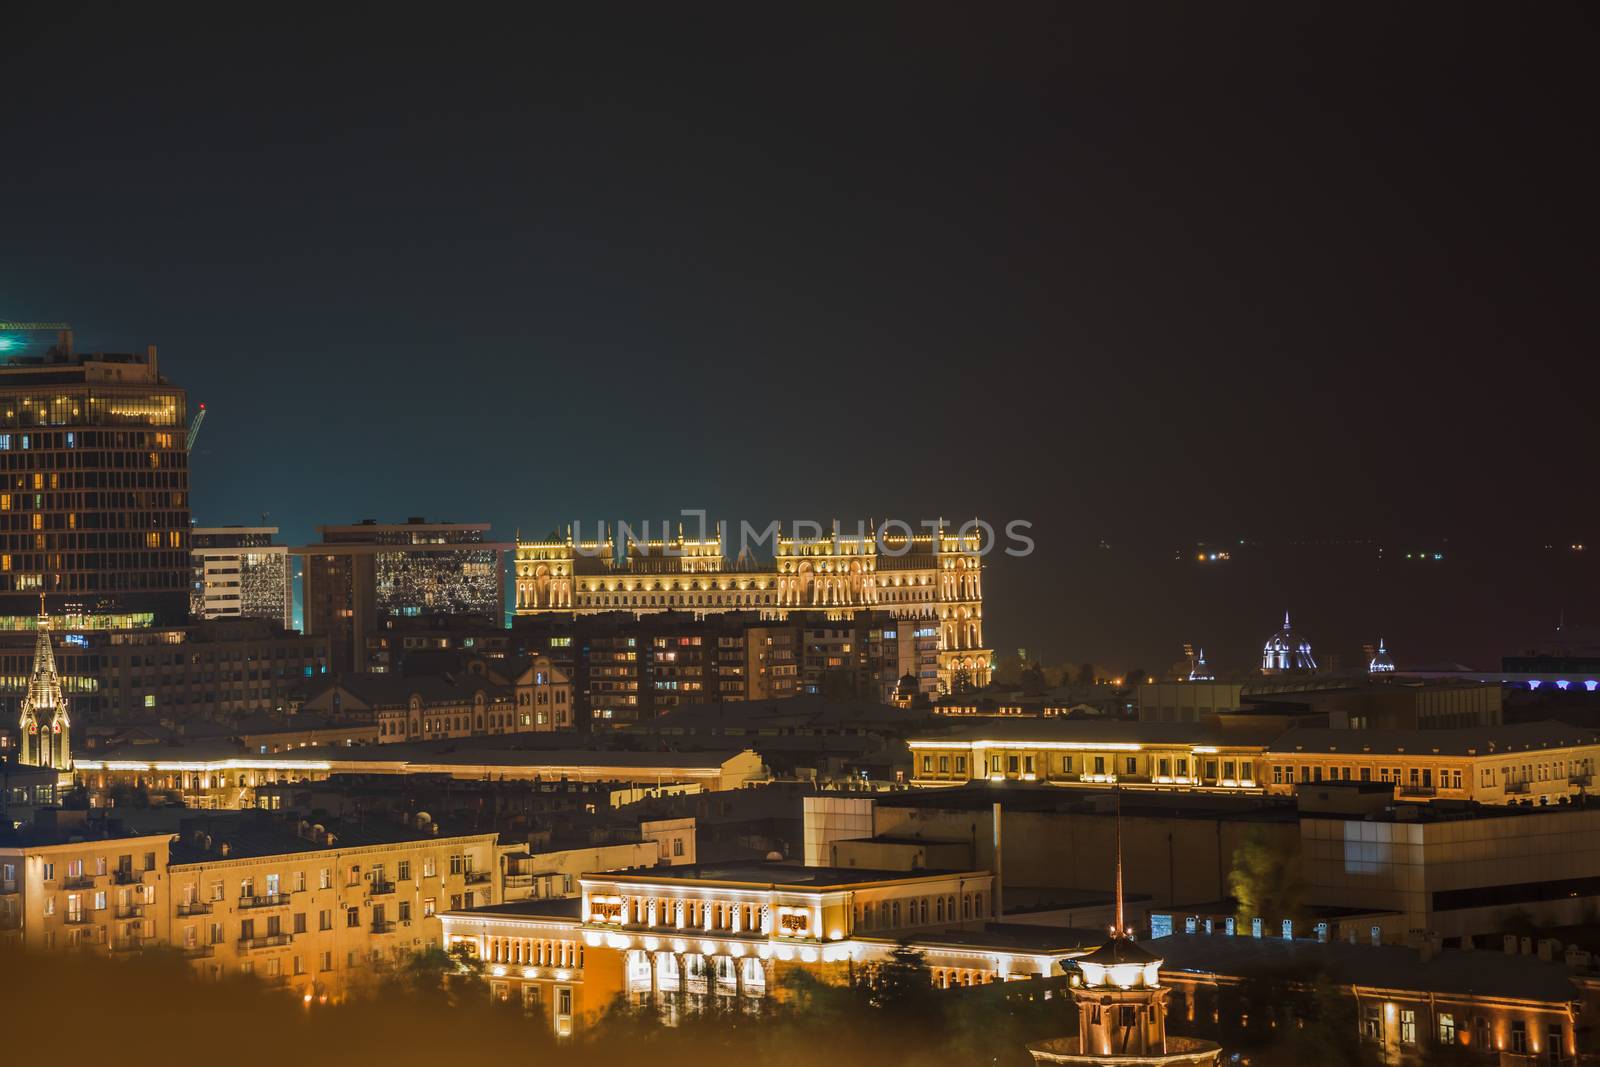 Baku, the capital city of Azerbaijan in the night